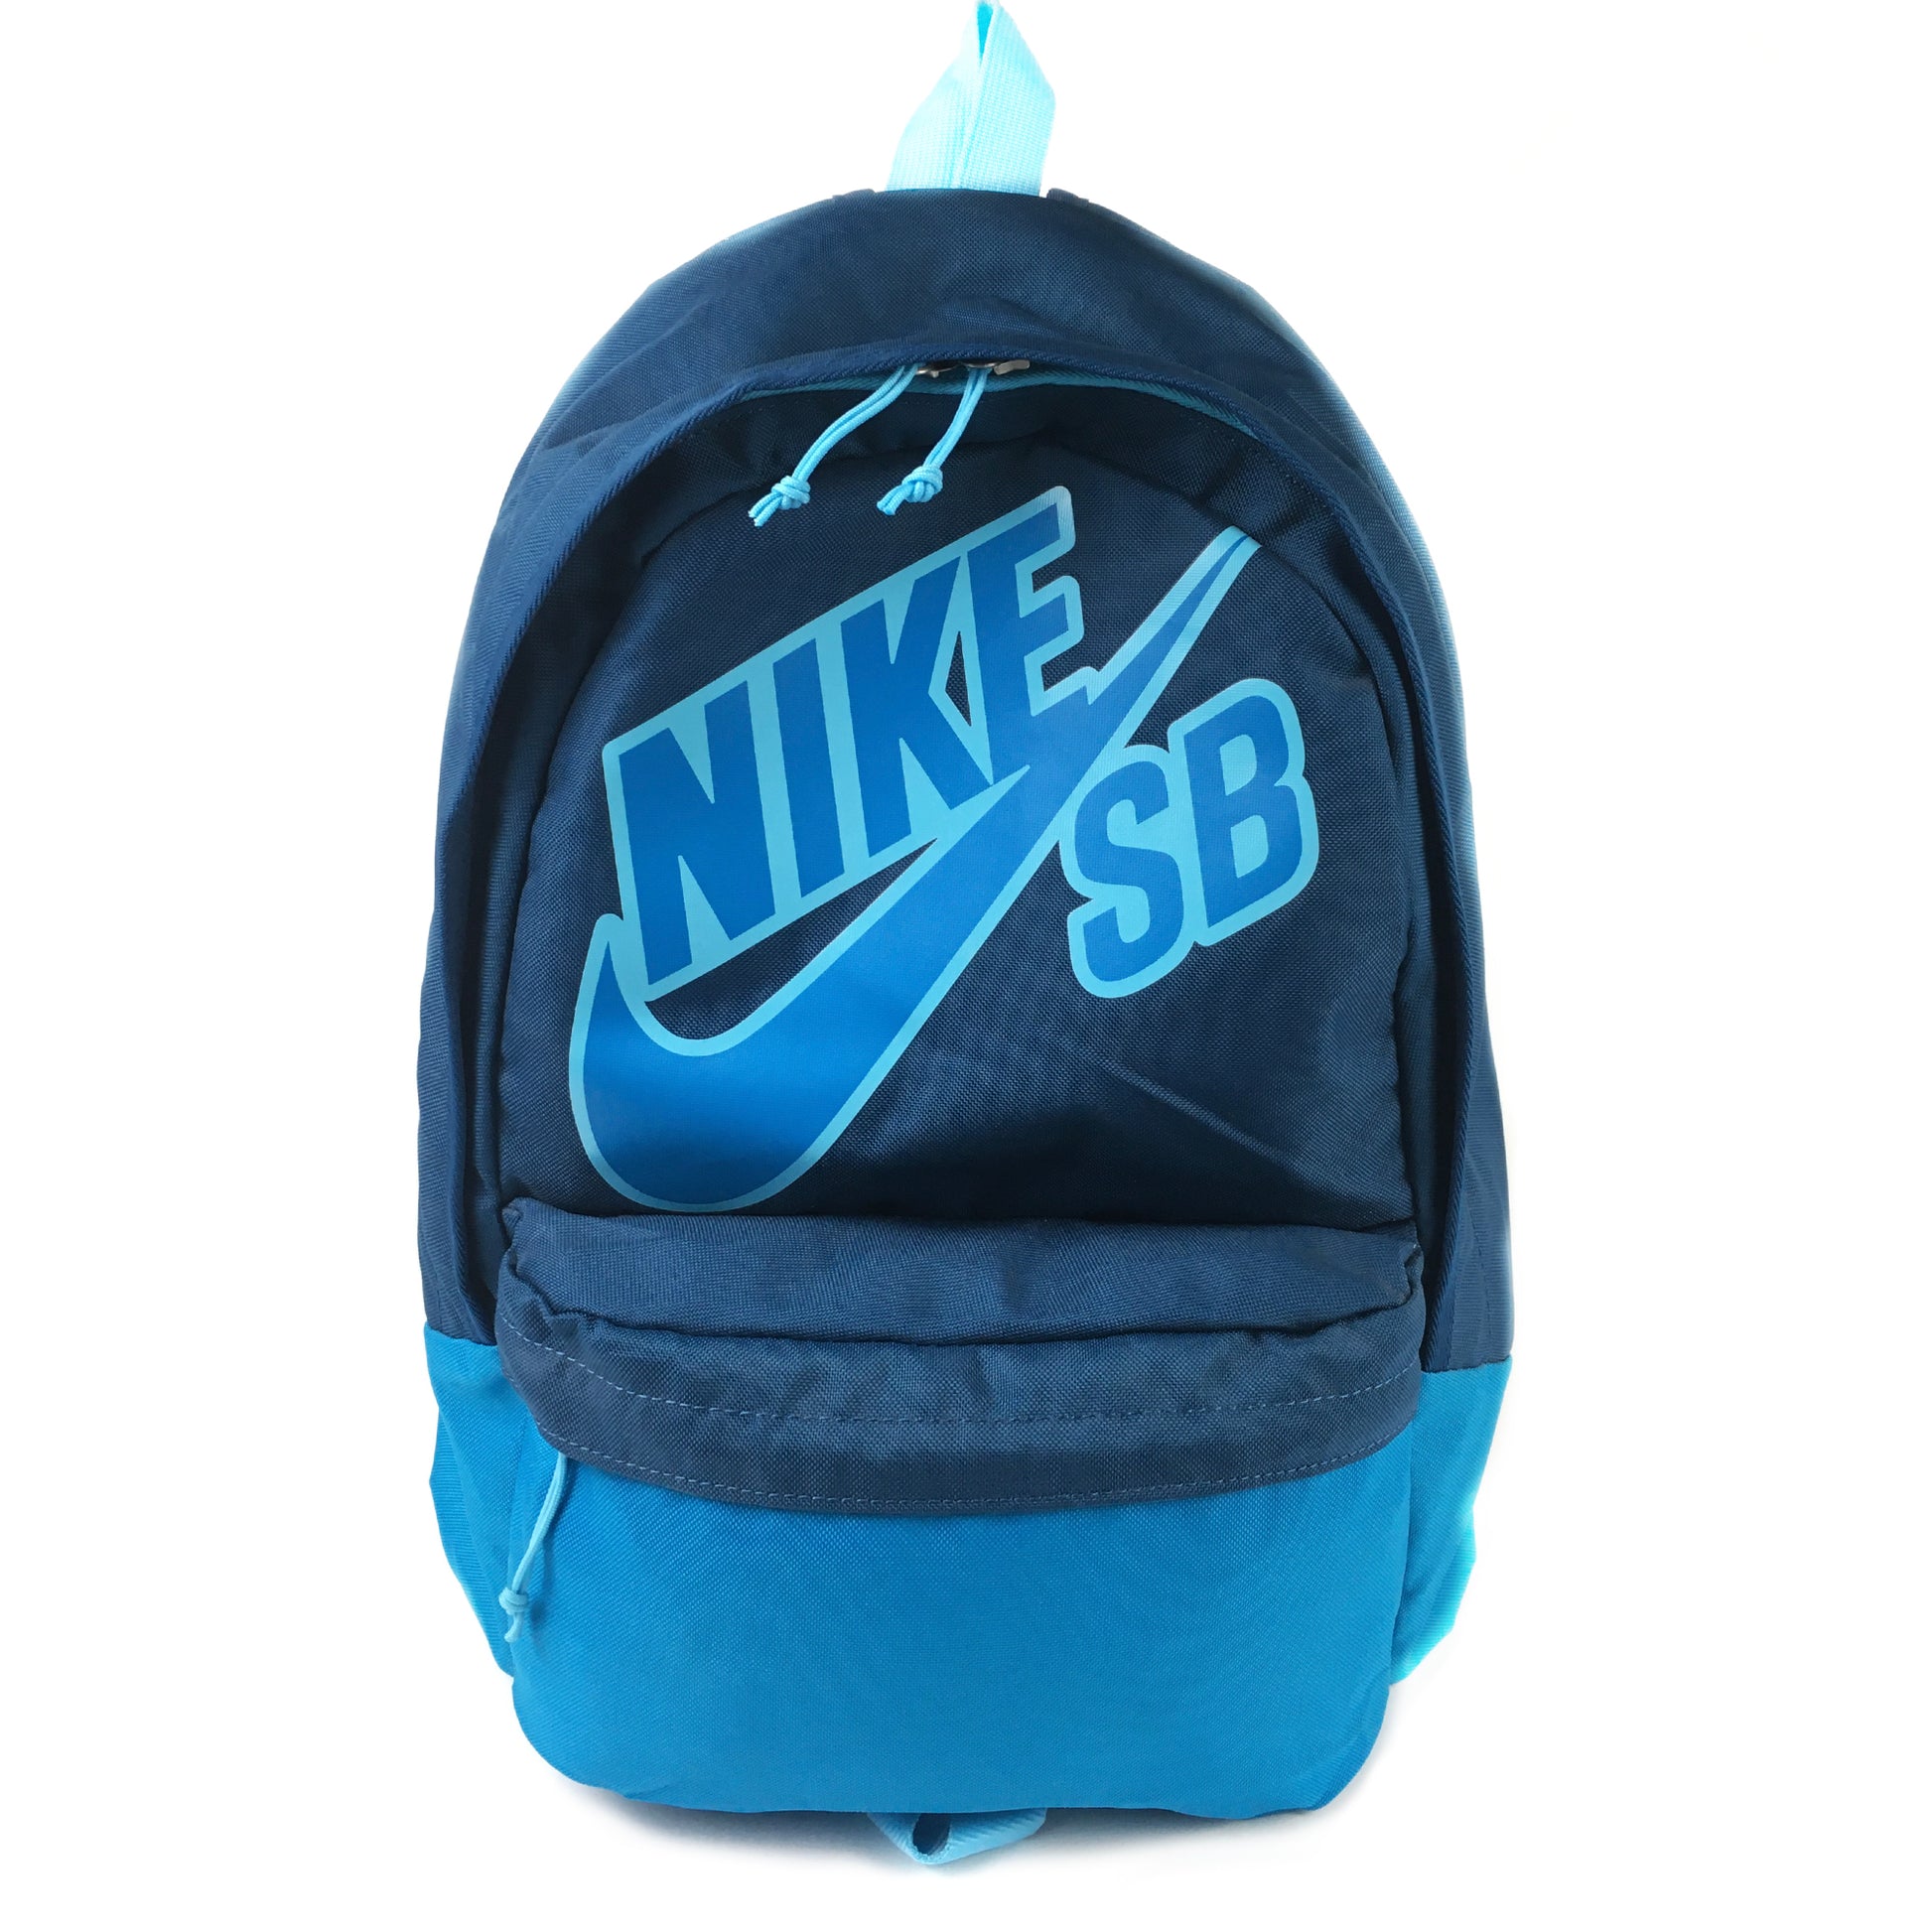 Nike SB Piedmont Backpack - Blue Force - Prime Delux Store